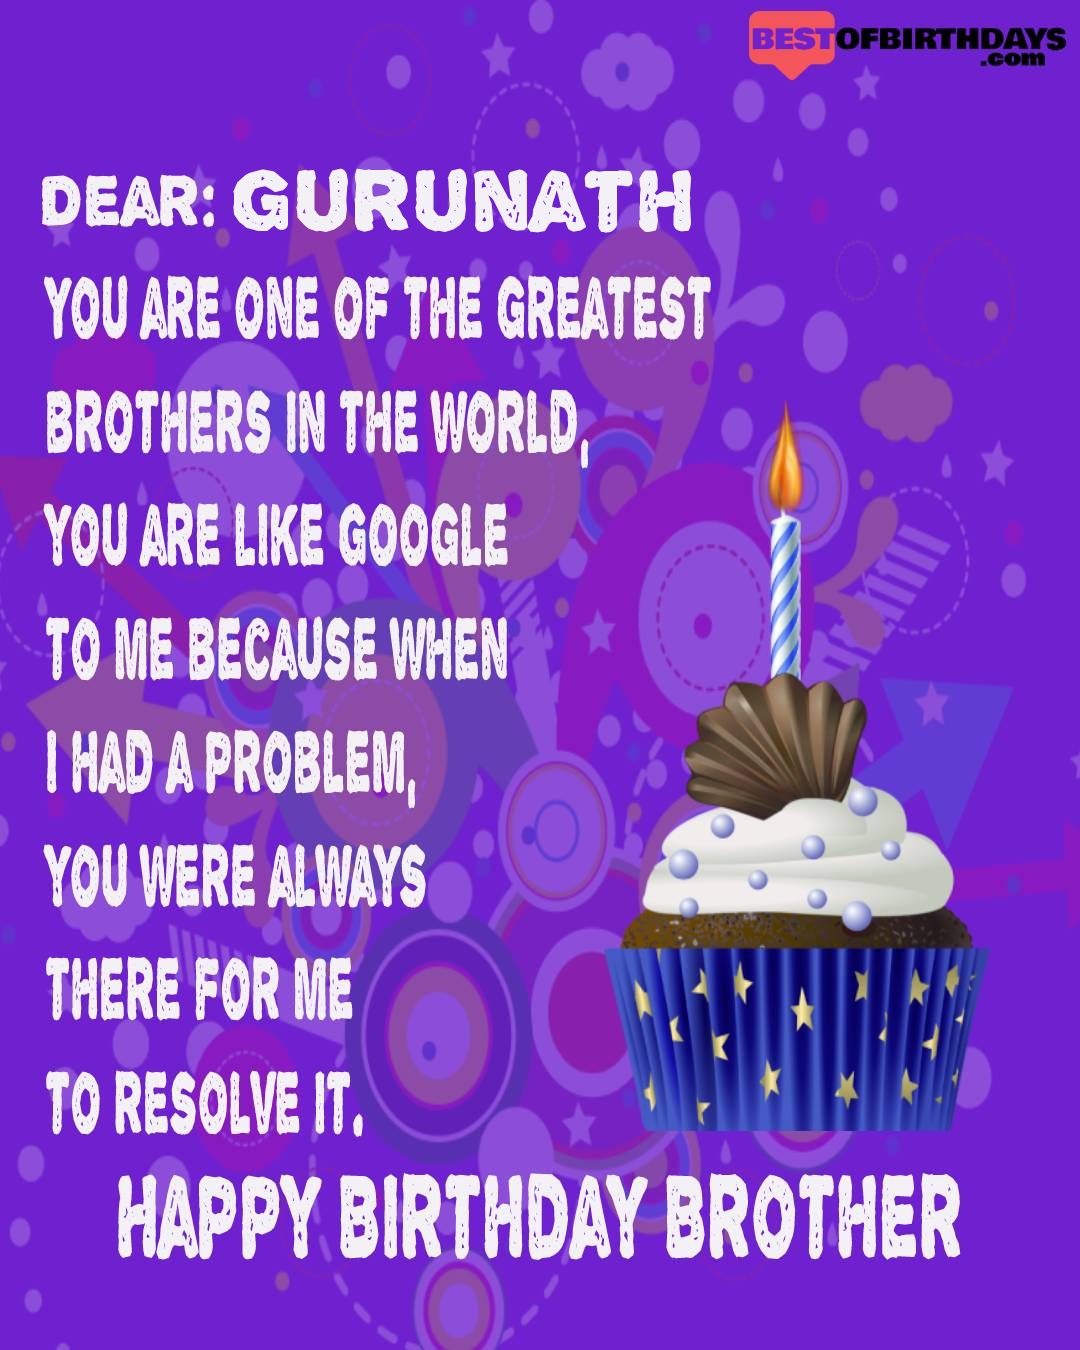 Happy birthday gurunath bhai brother bro